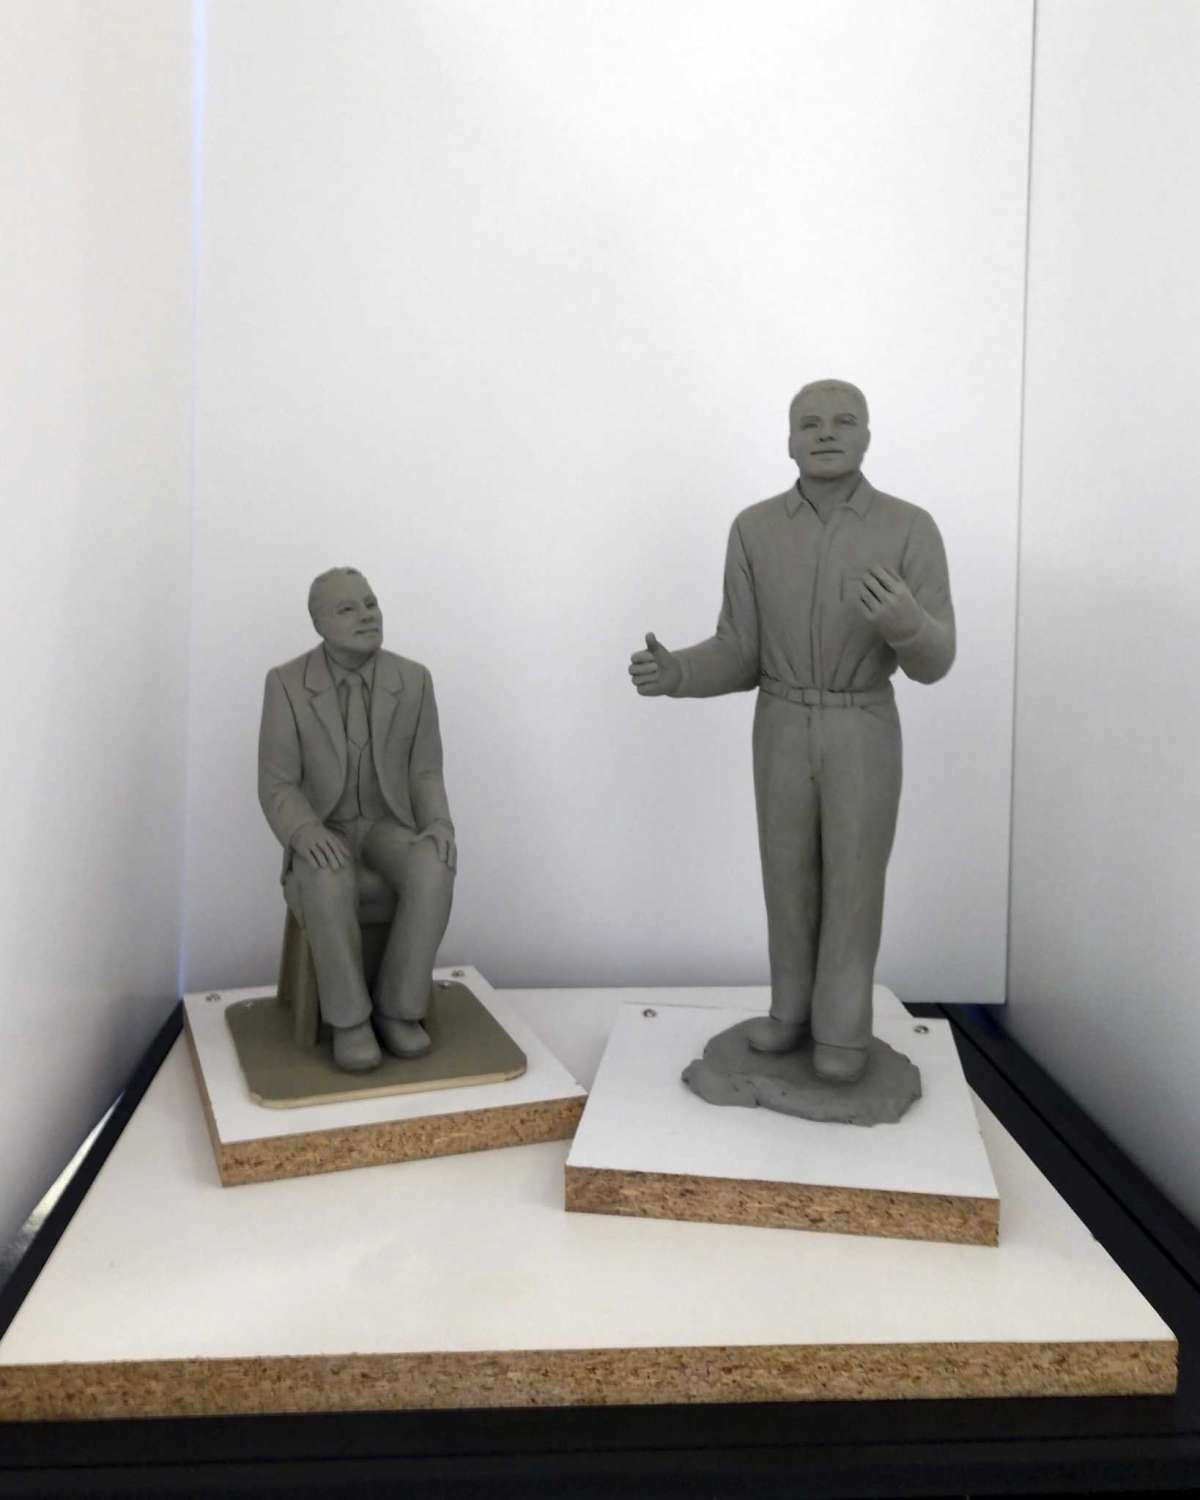 The James Earl Jones/Donald Crouch sculpture.